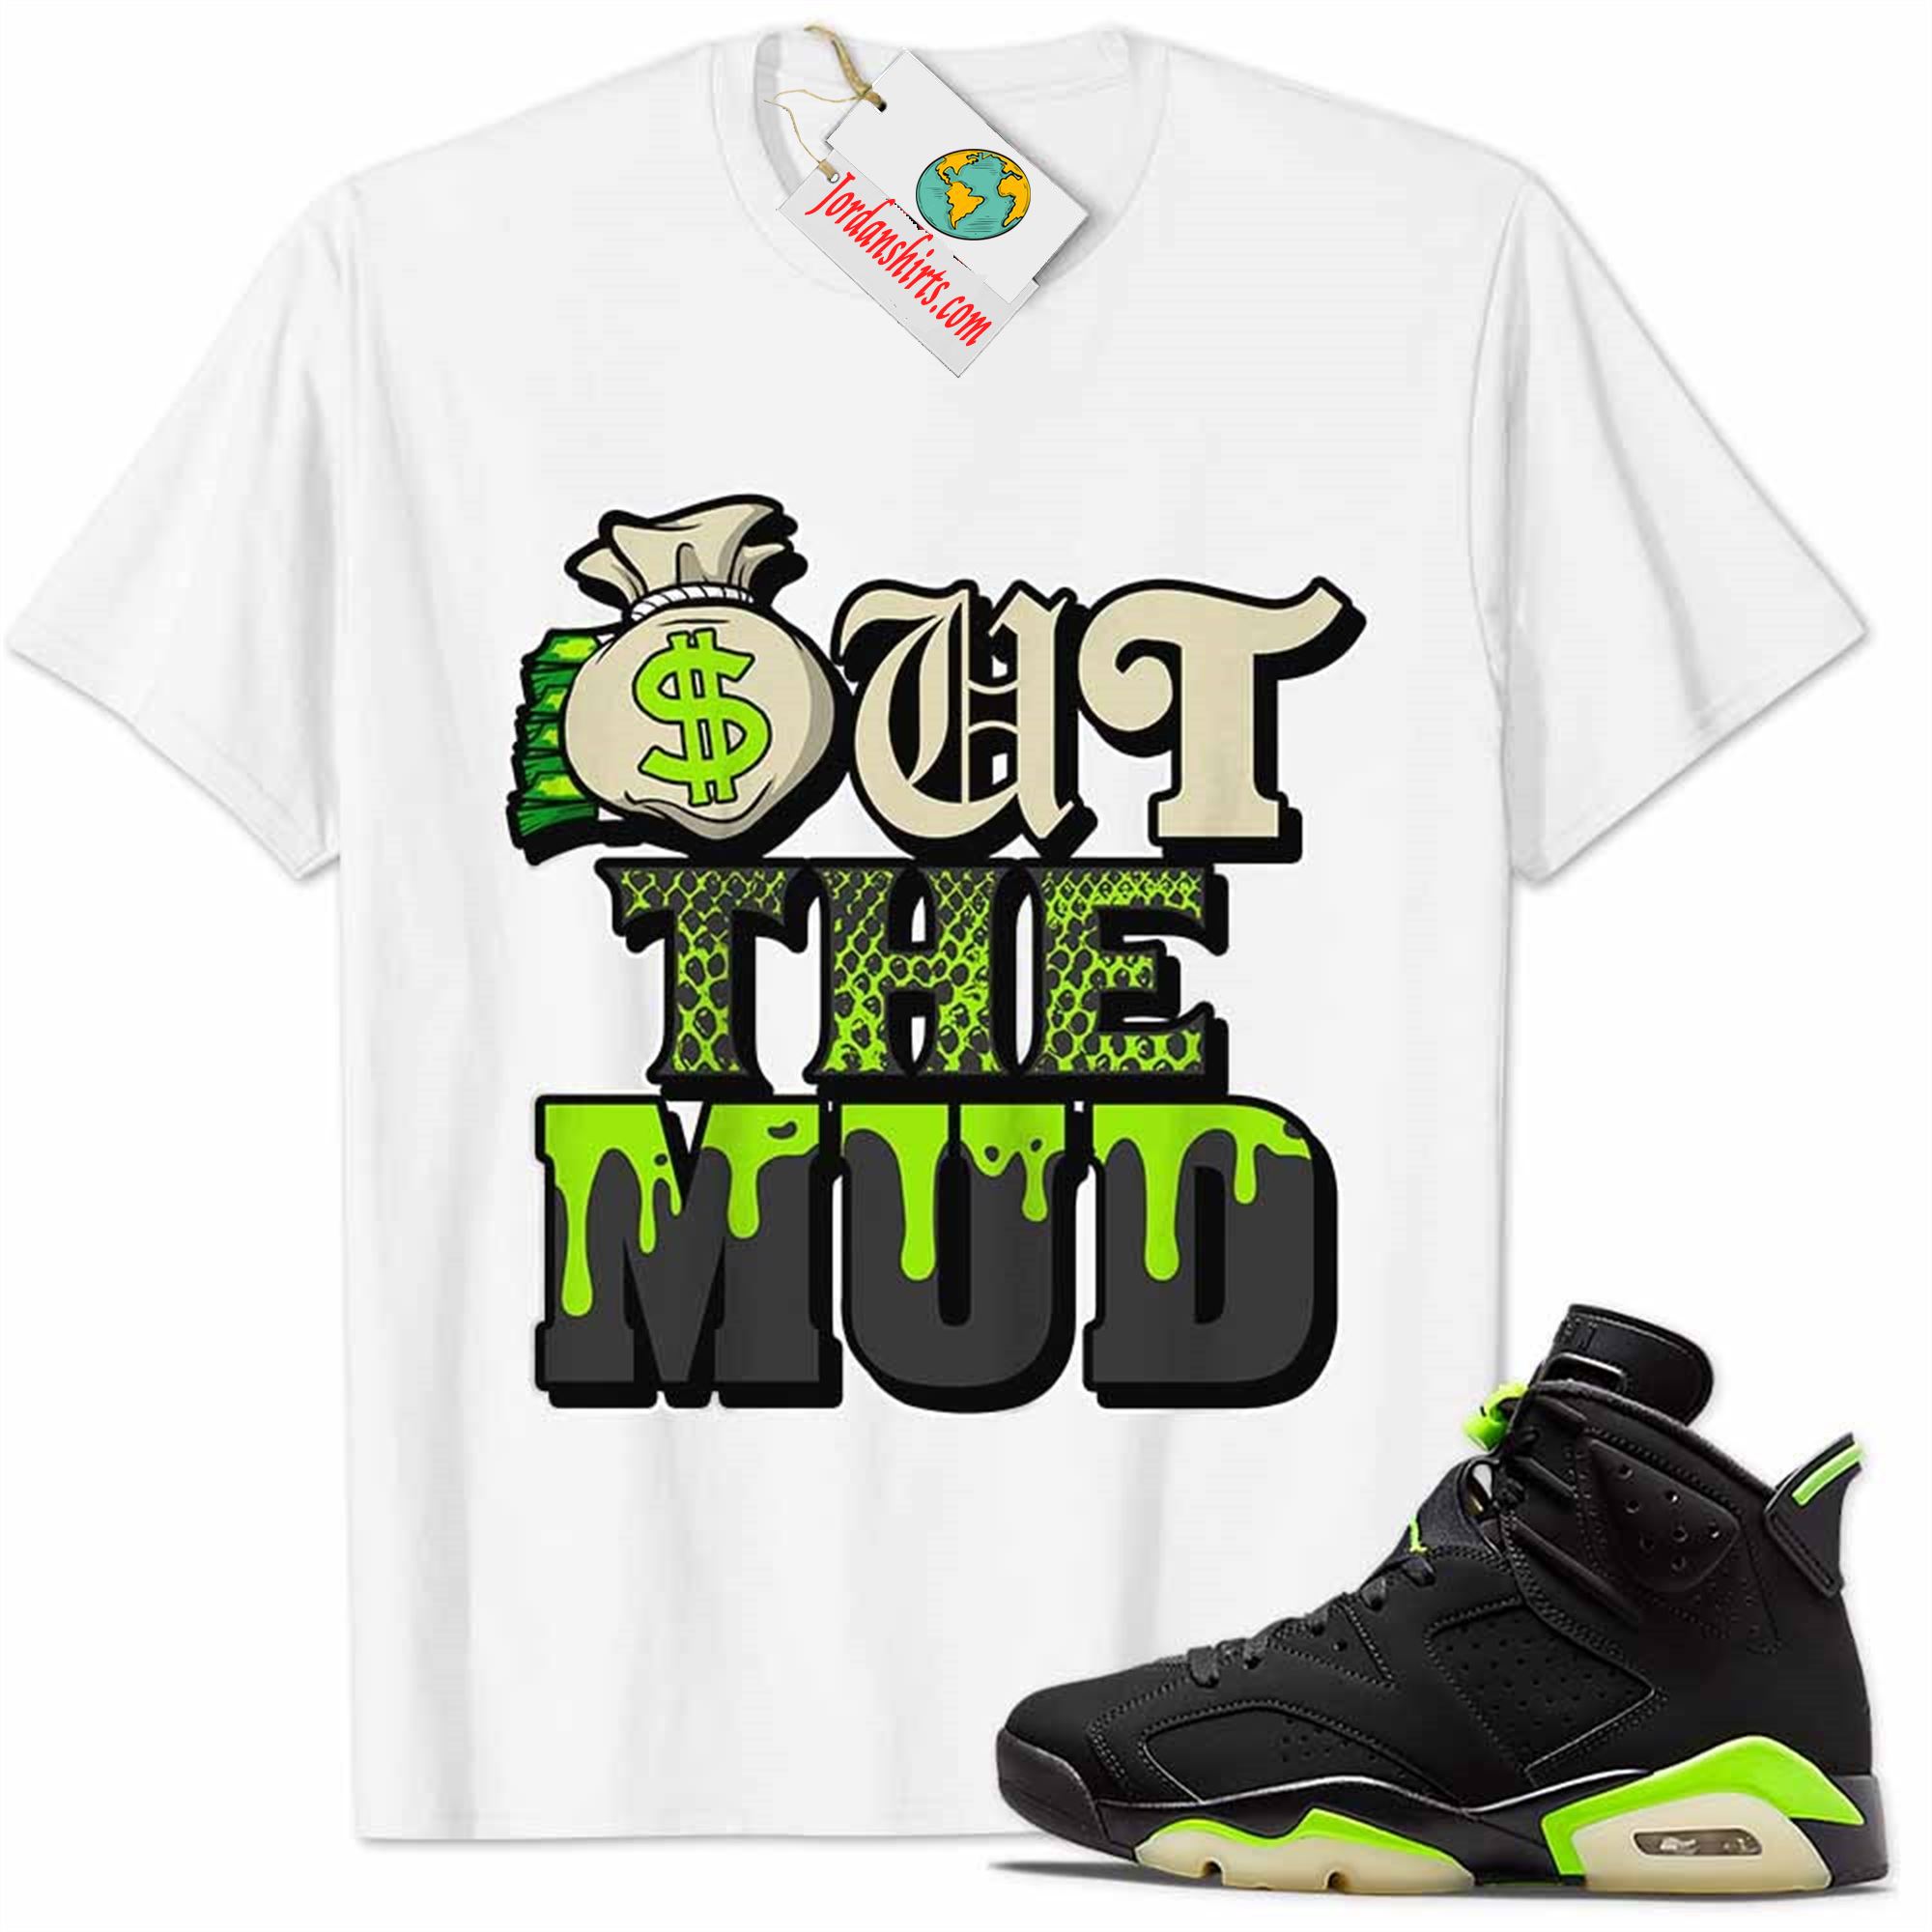 Jordan 6 Shirt, Jordan 6 Electric Green Shirt Out The Mud Money Bag White Plus Size Up To 5xl